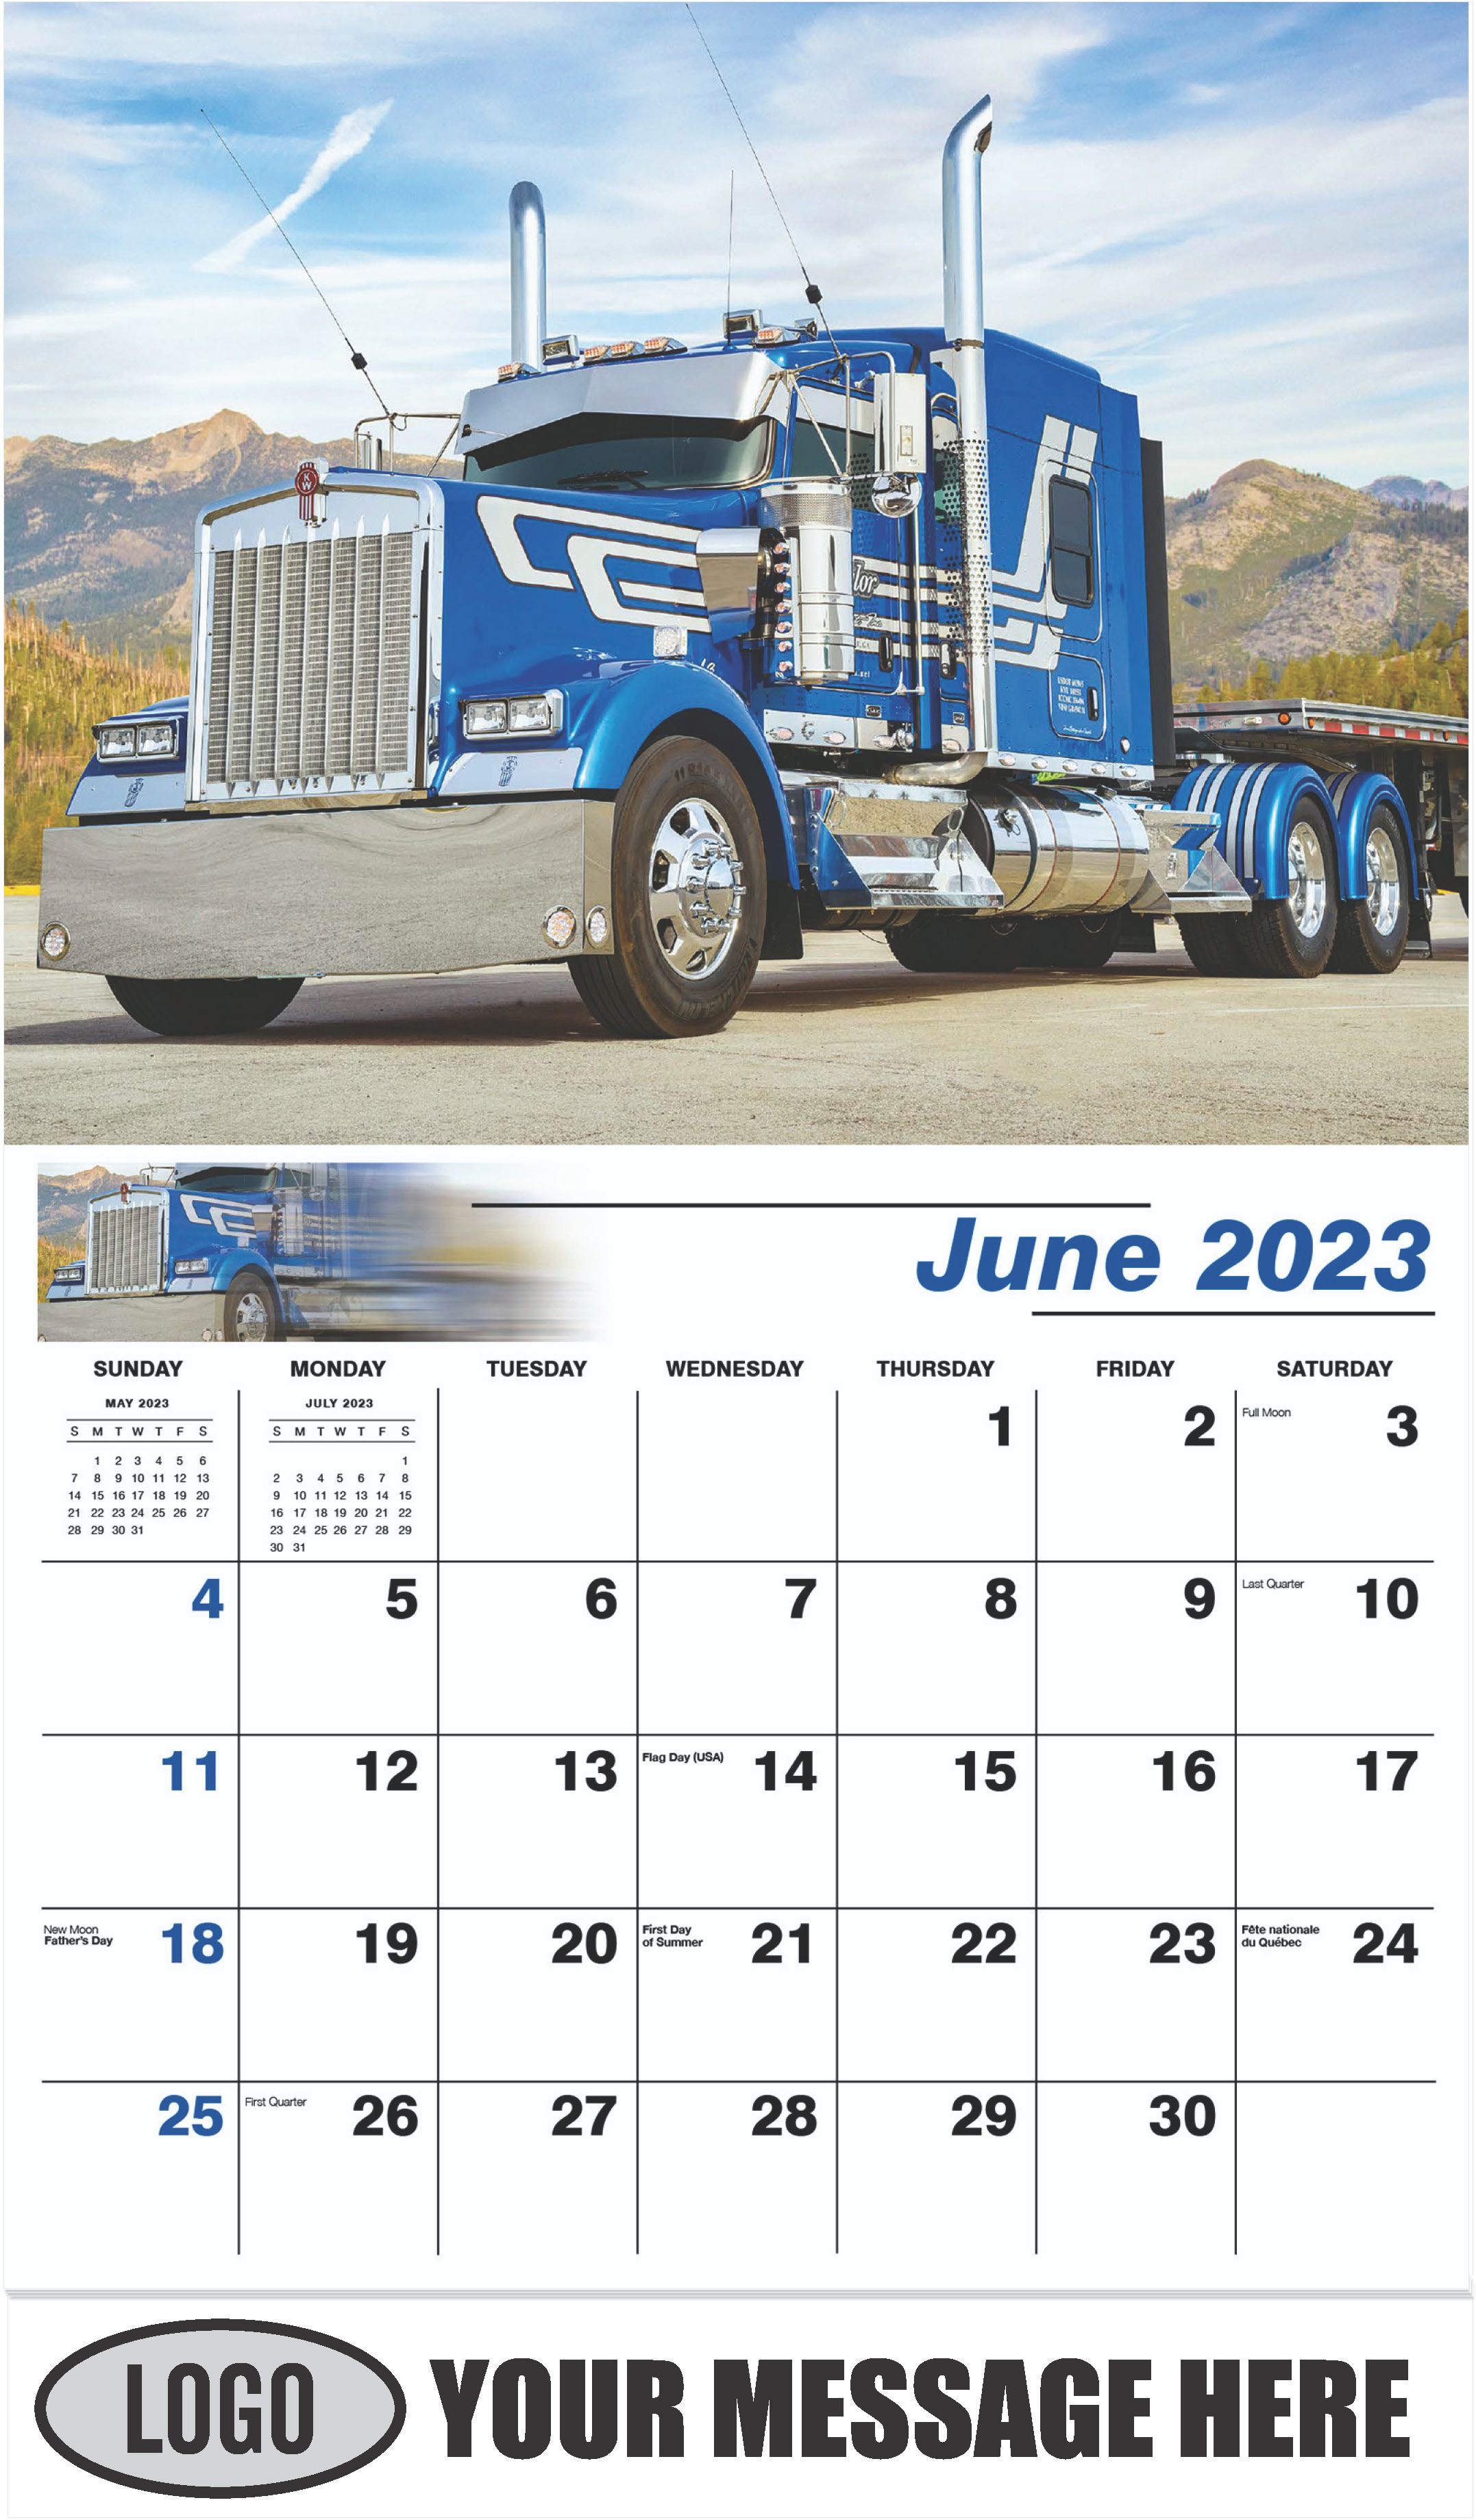 2016 Kenworth W900L - June - Kings of the Road 2023 Promotional Calendar